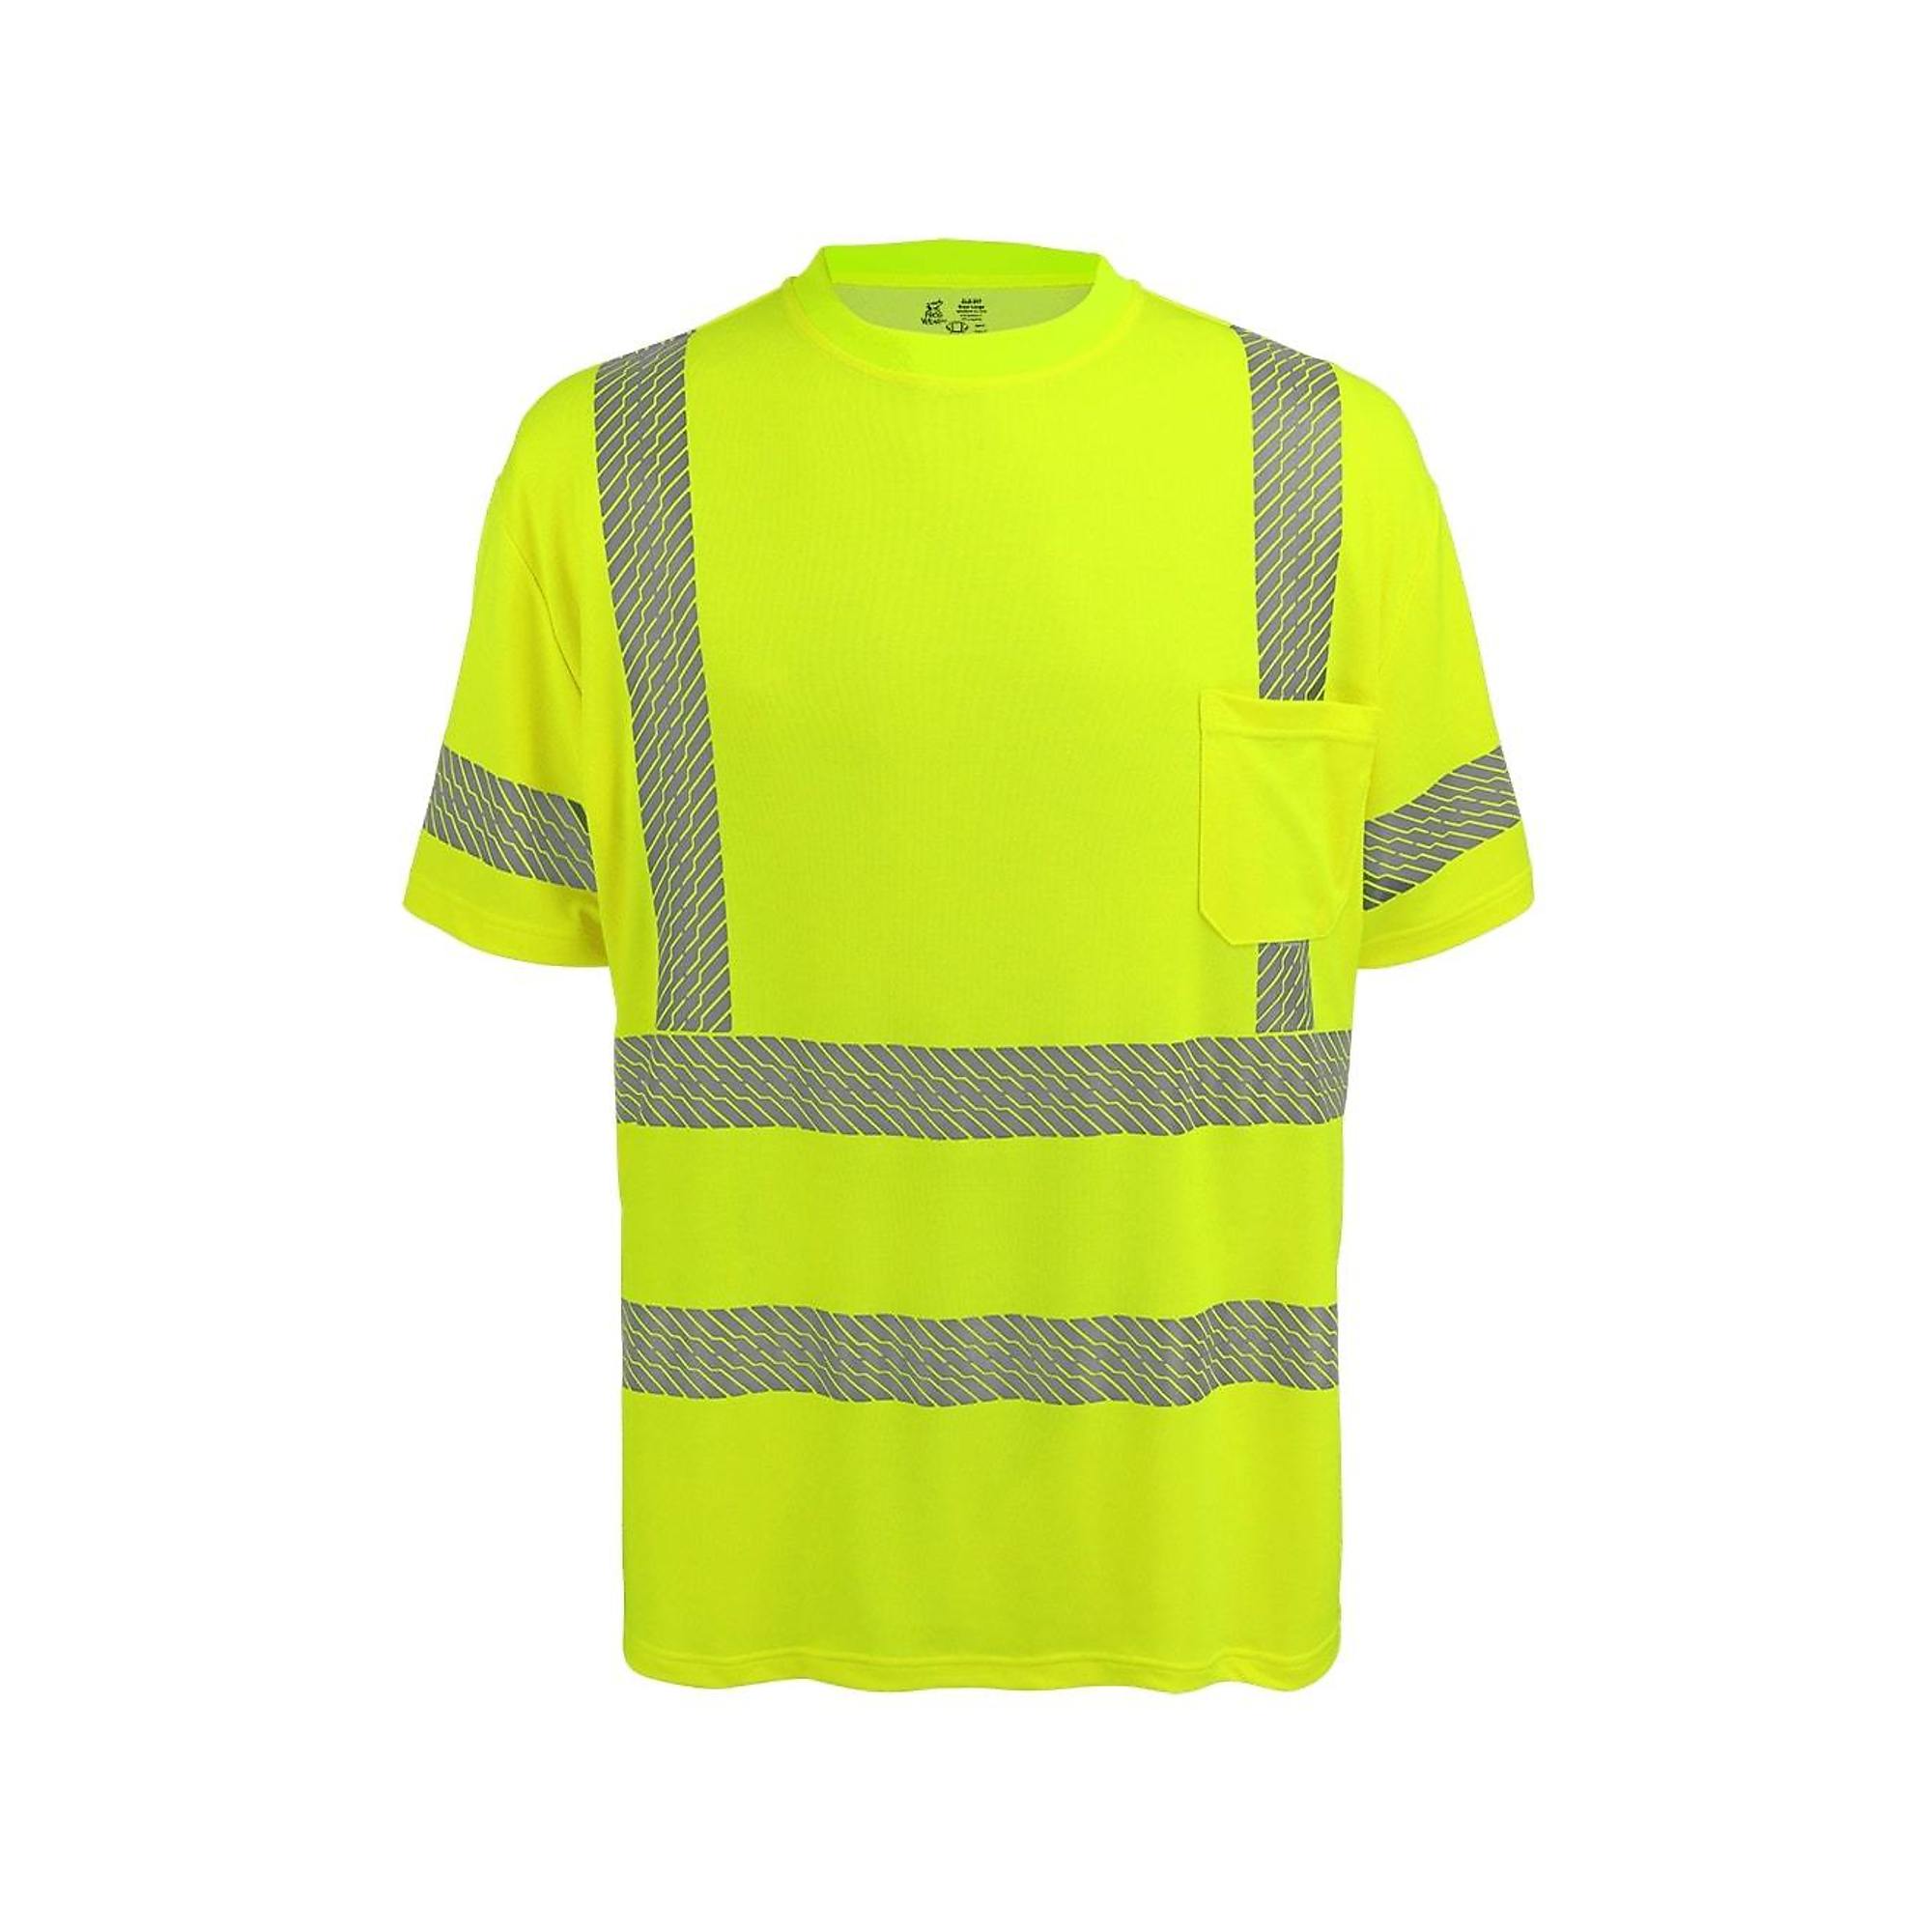 FrogWear, HV Yellow/Green,Class 3Bamboo Self-Wicking, Athletic Shirt, Size XL, Model GLO-217-XL